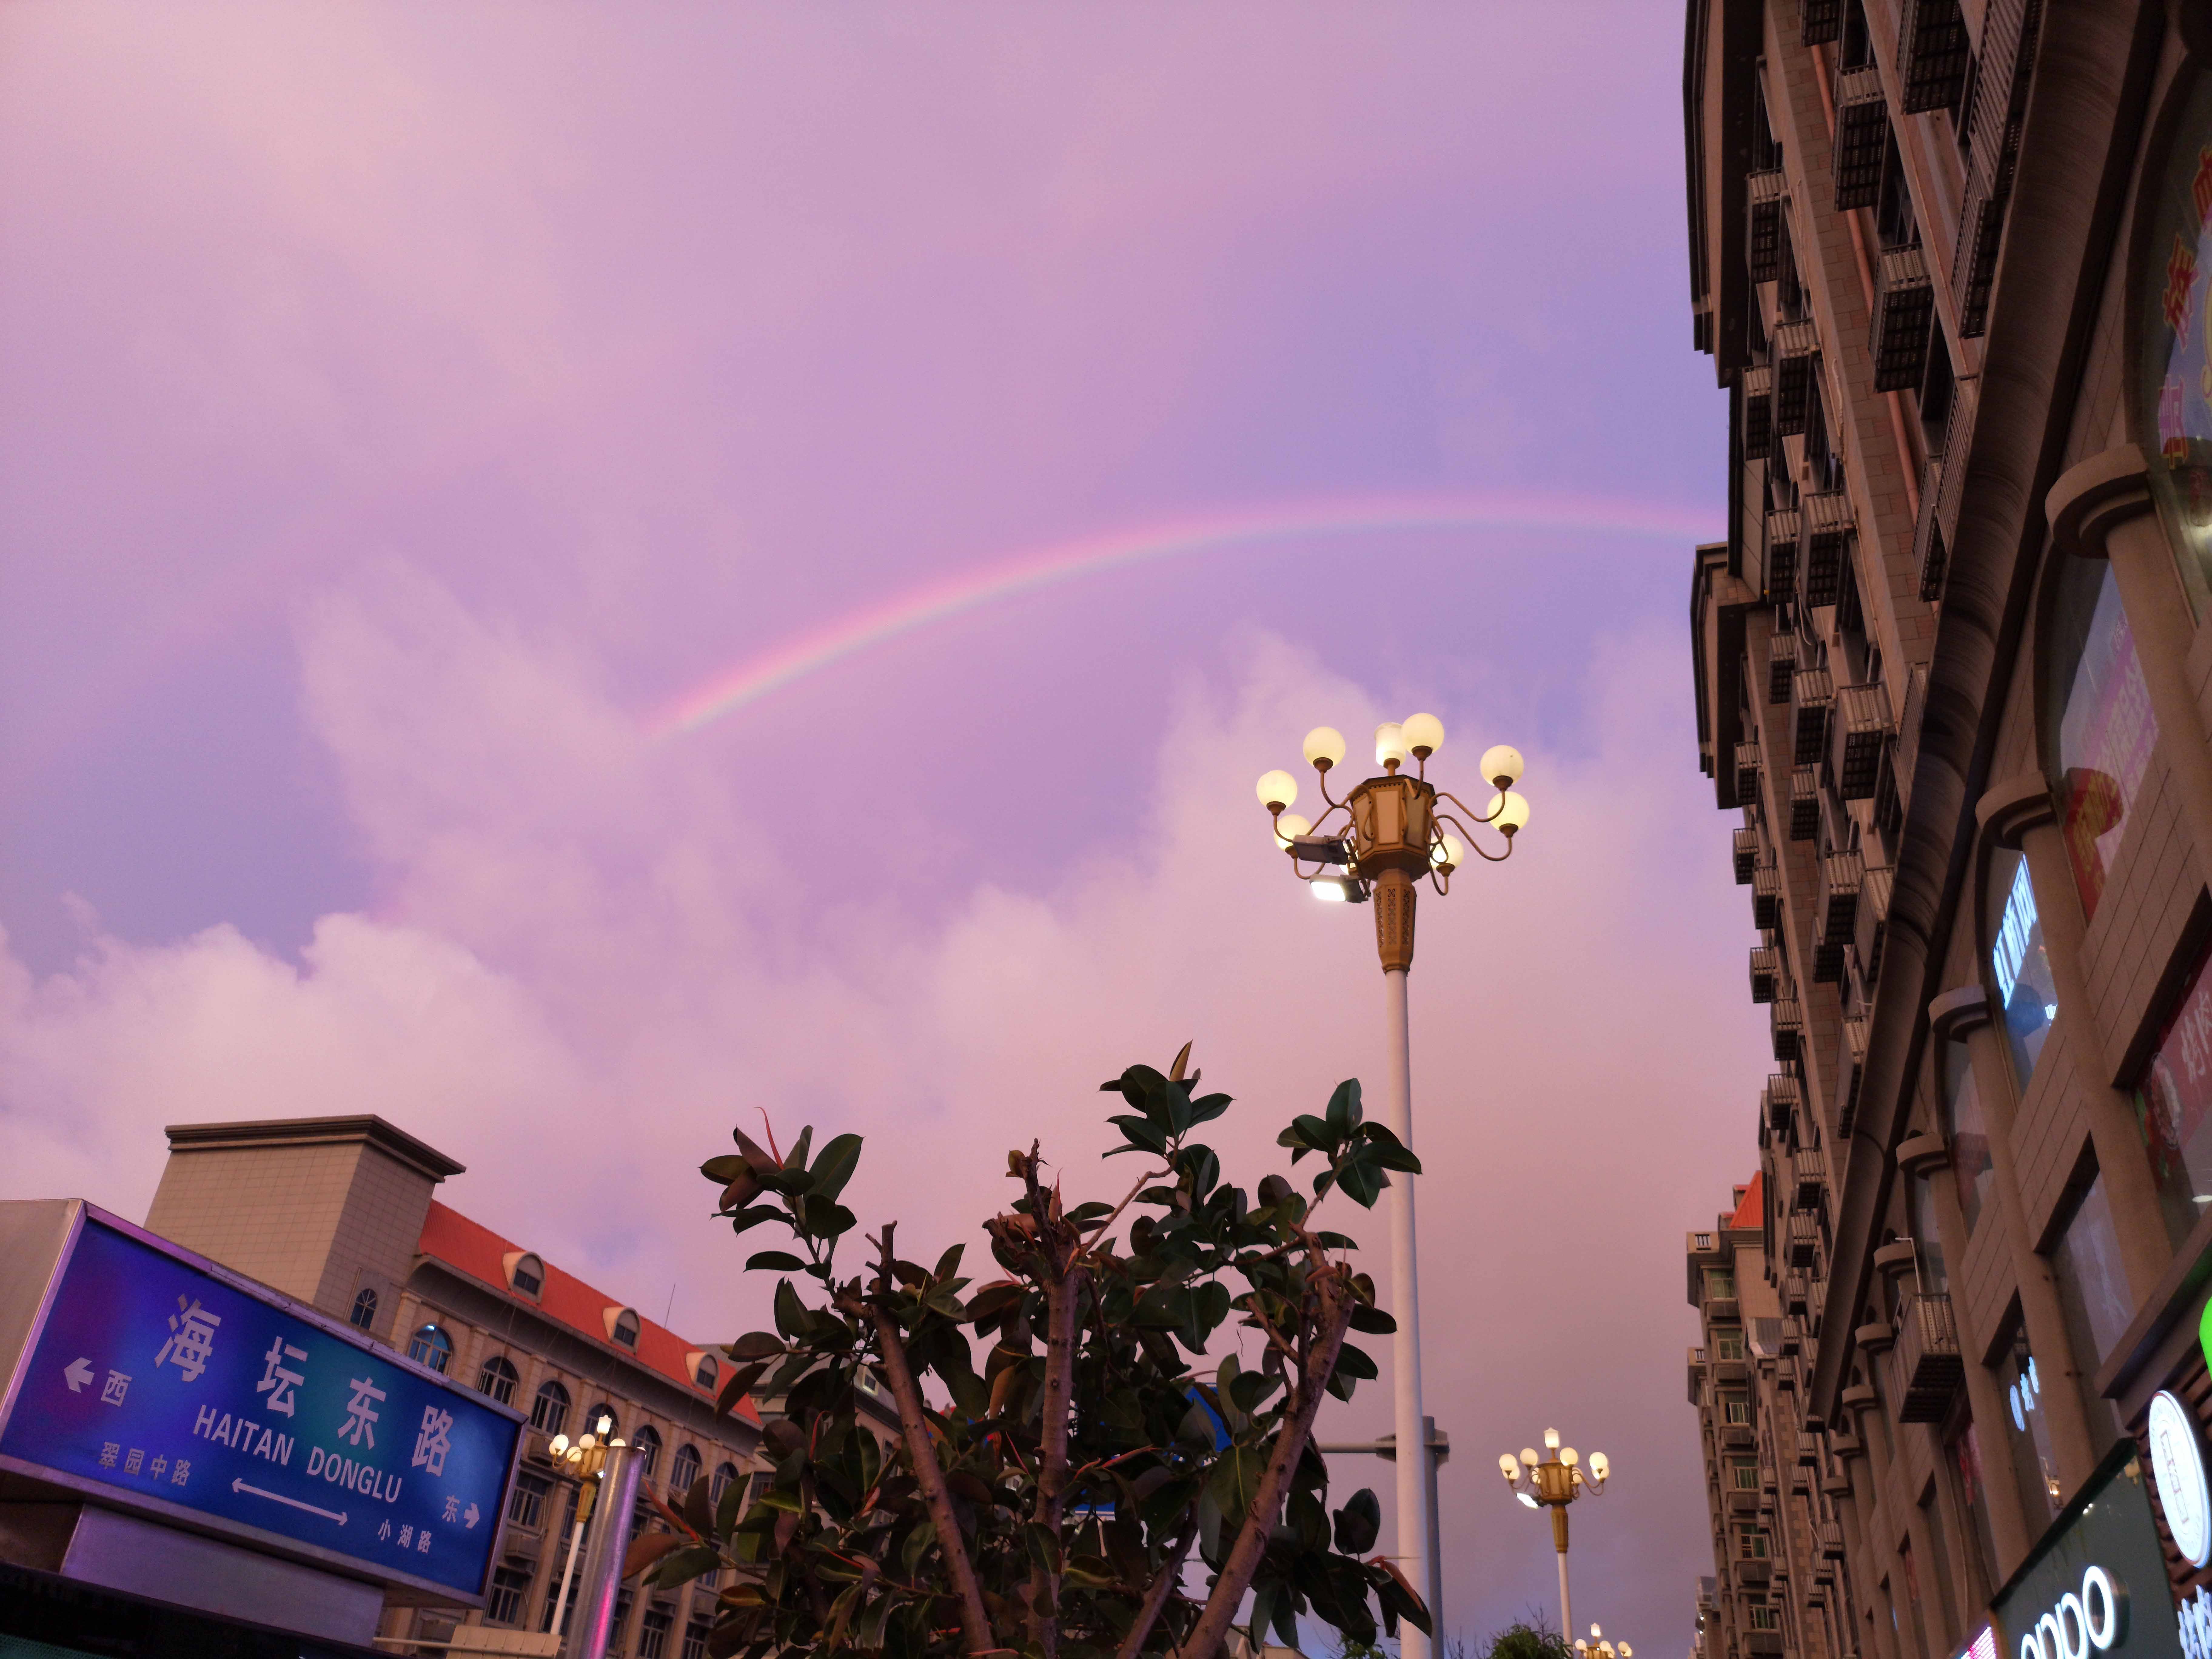 Dual rainbows & flaming clouds amaze tourists in Pingtan